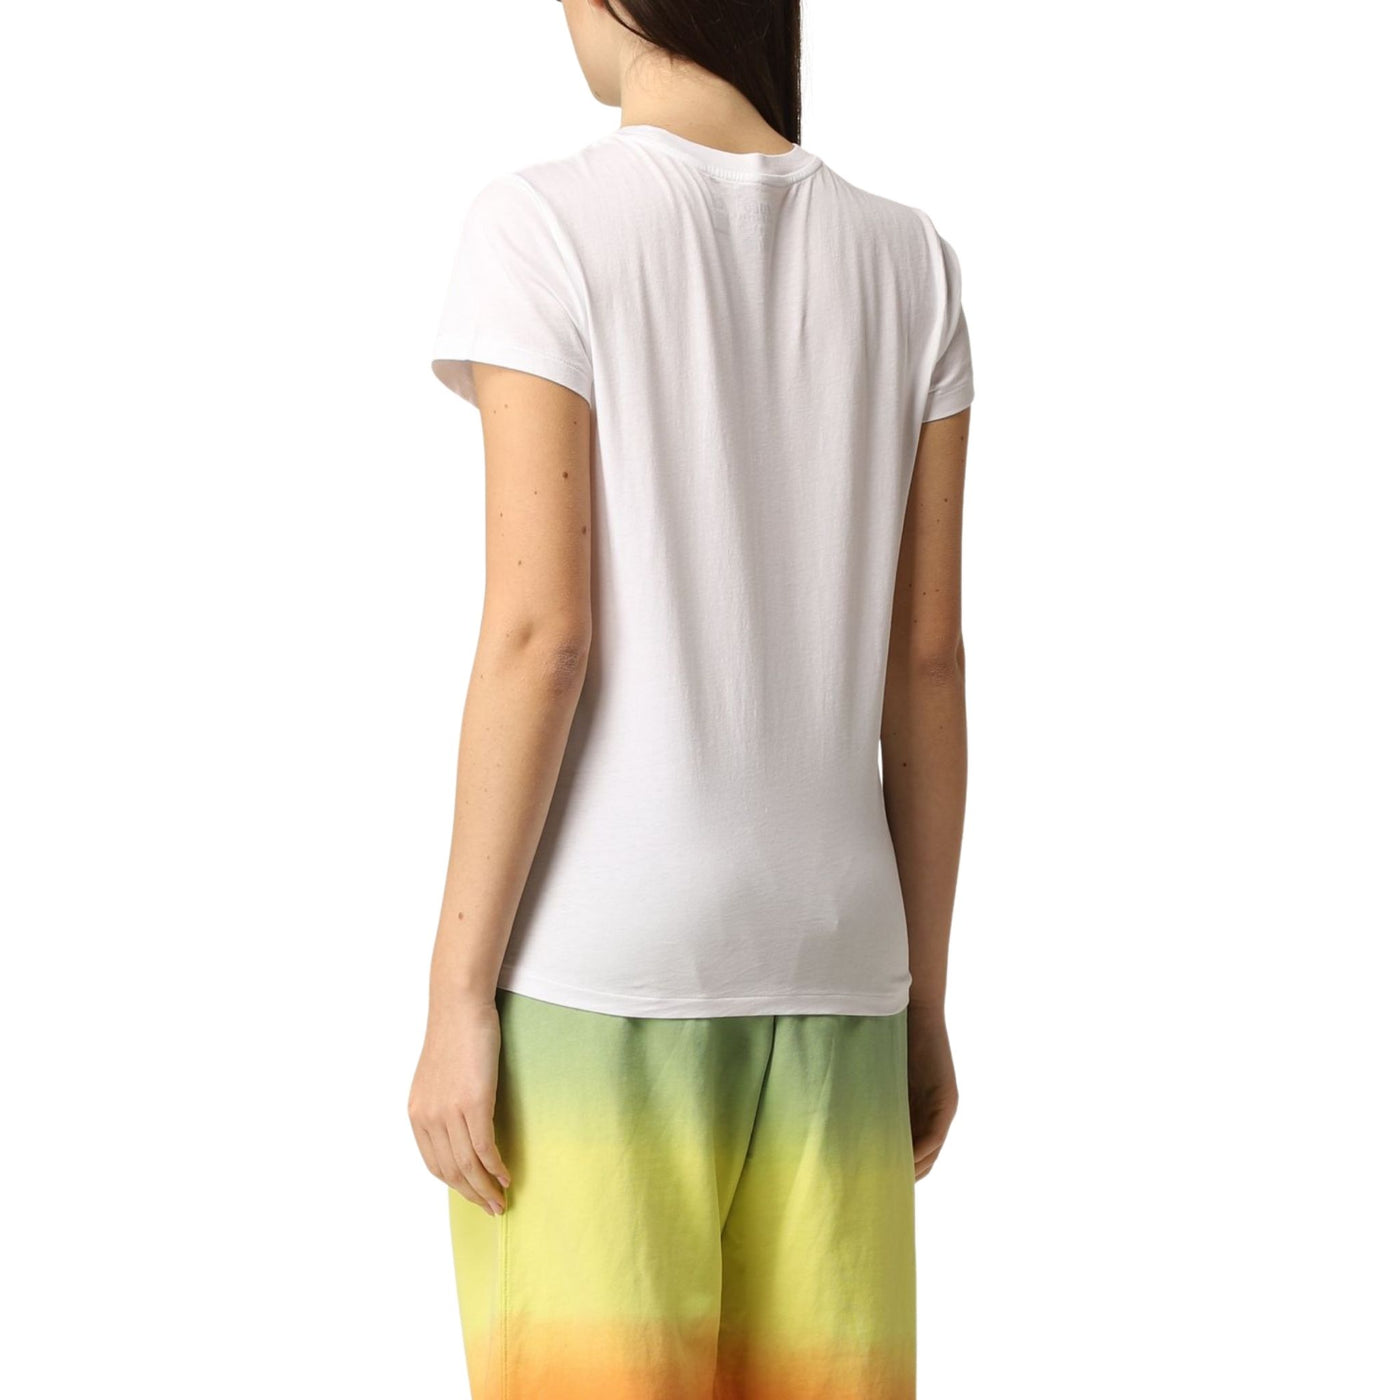 T-shirt donna bianca Polo Ralph Lauren su modella vista retro